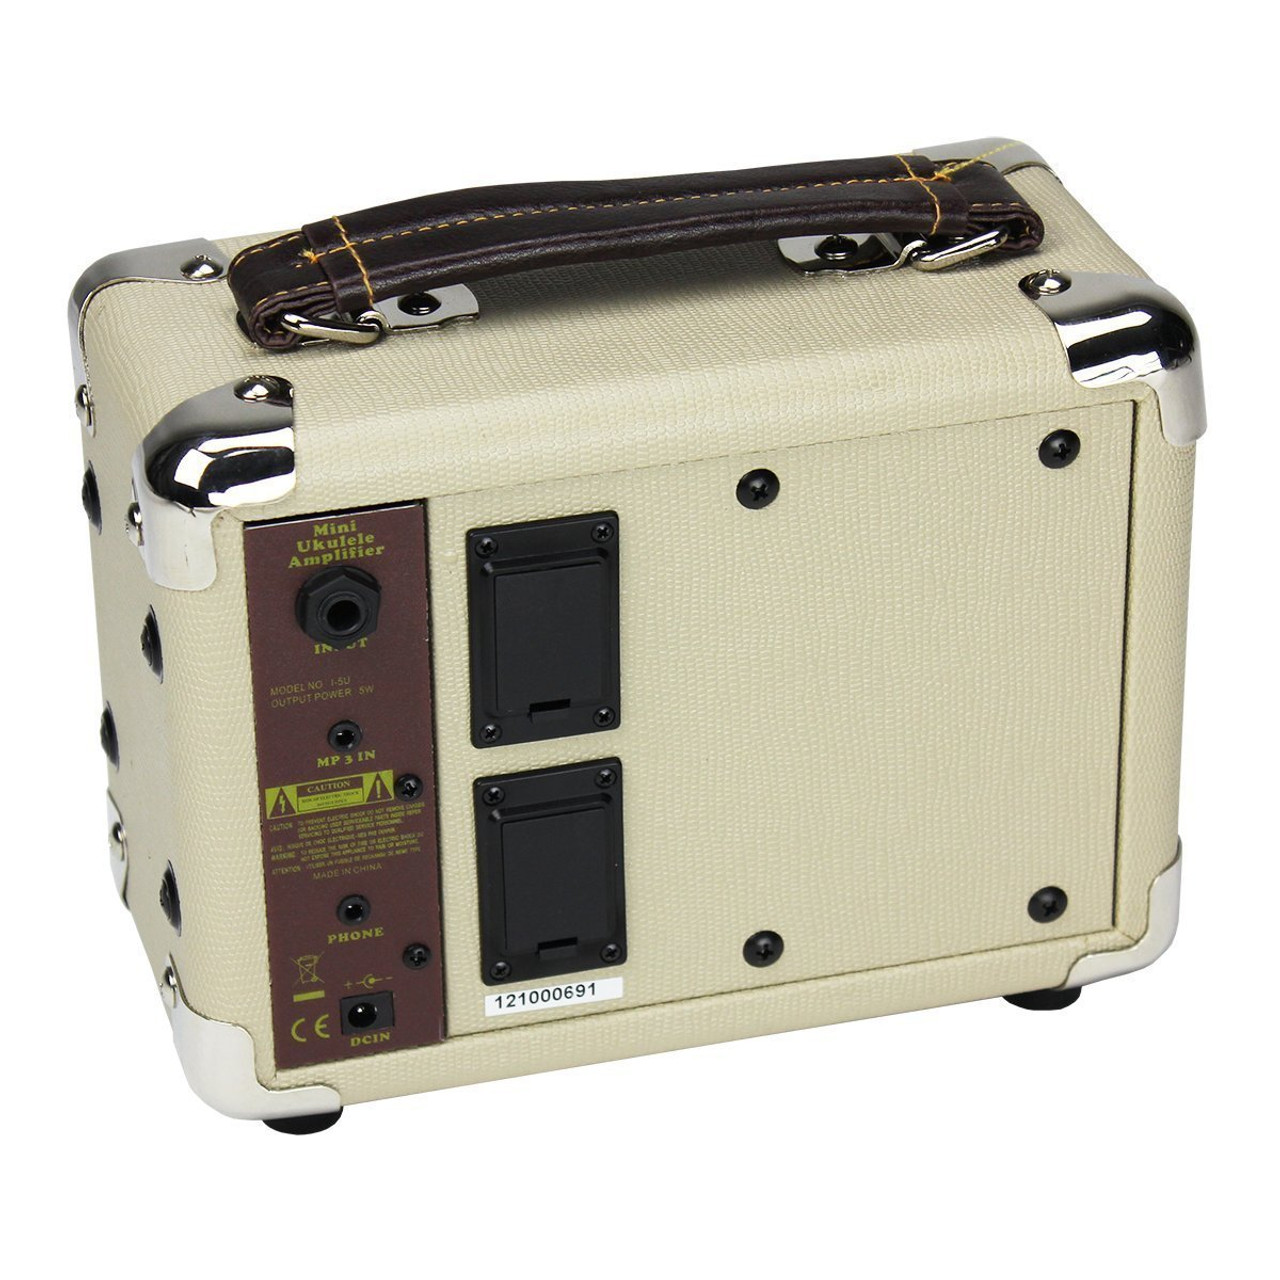 Tiki 5 Watt Portable Ukulele Amplifier (Vintage White)